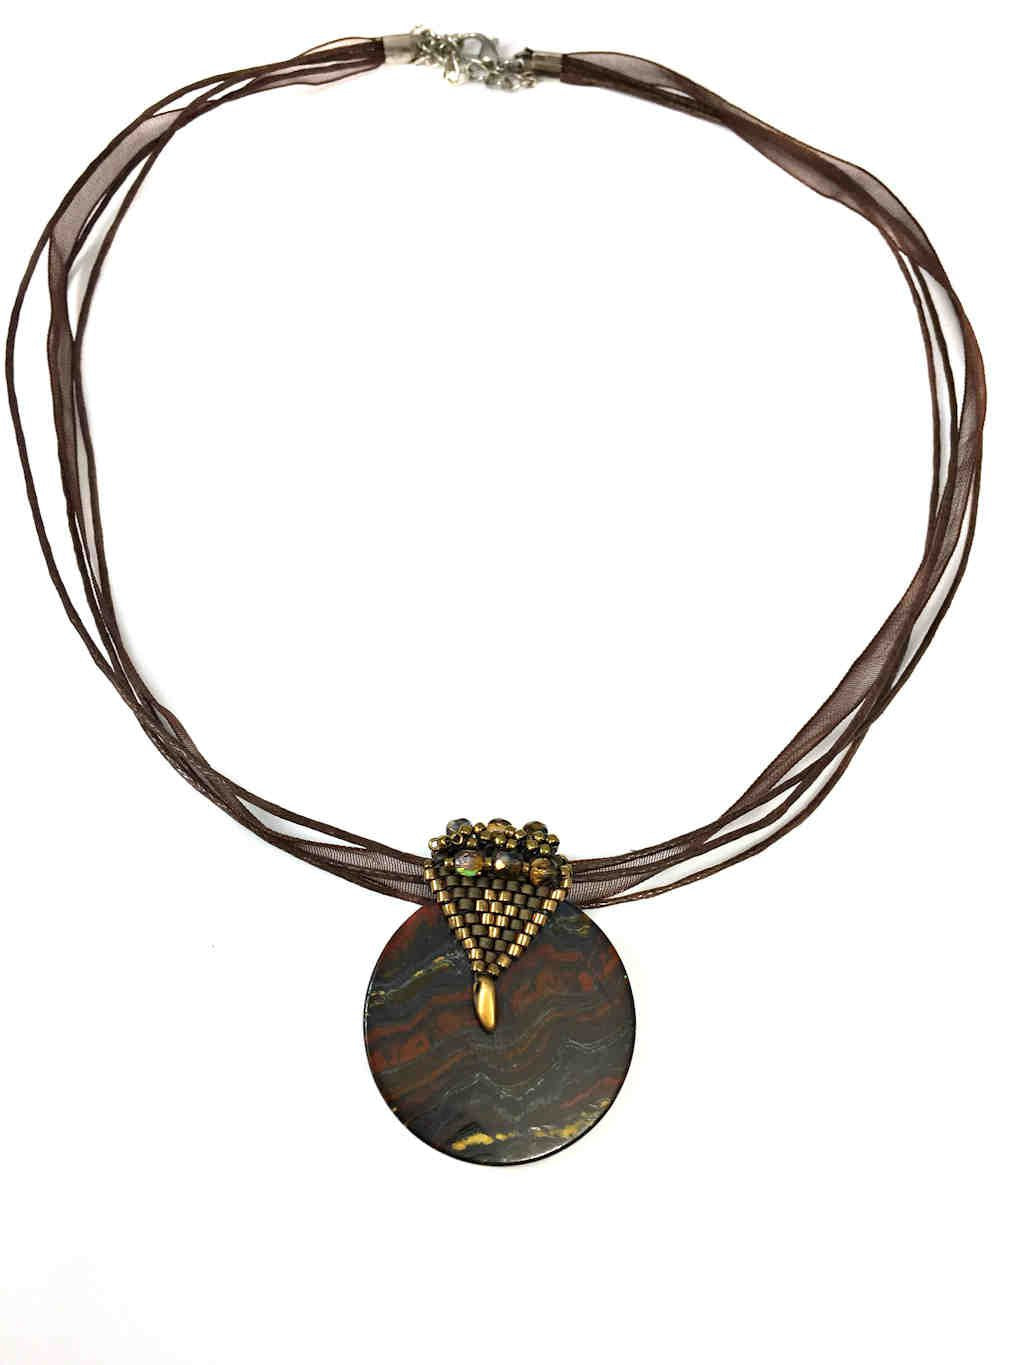 elegant tigers eye pendant with elaborate beaded gold bail